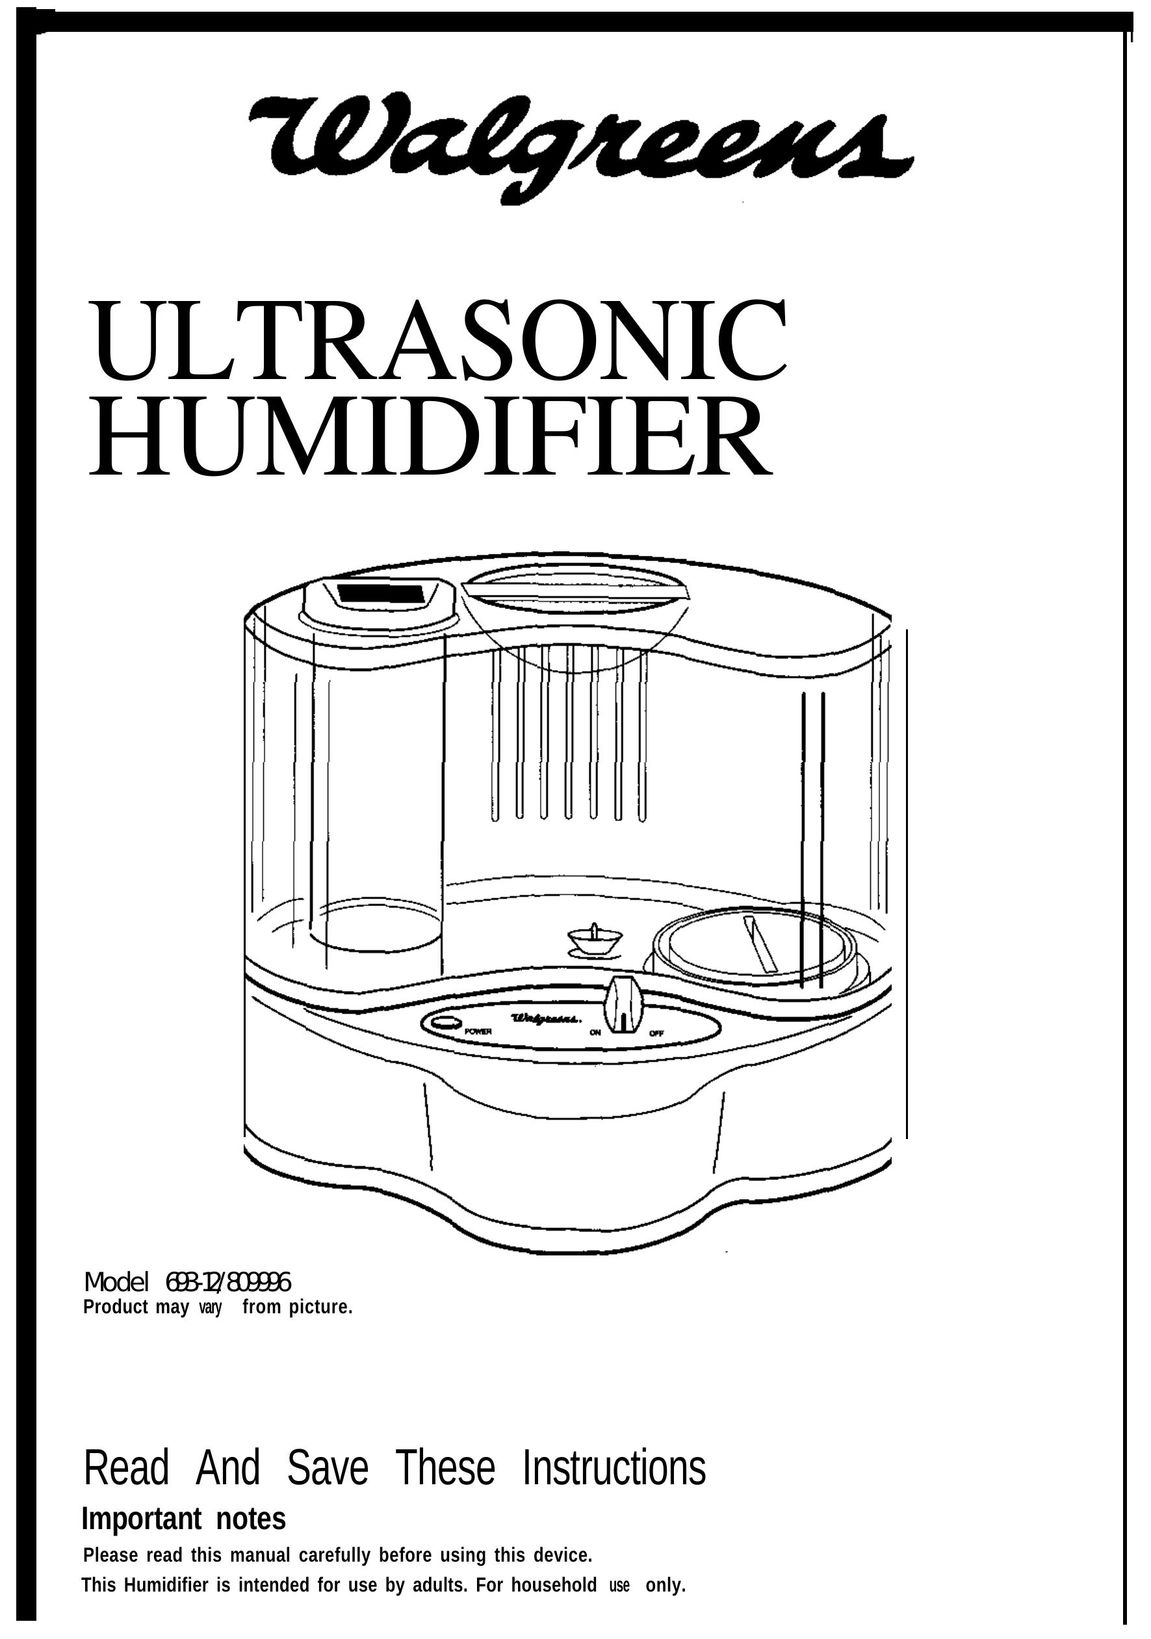 Walgreens 693-12/809996 Humidifier User Manual